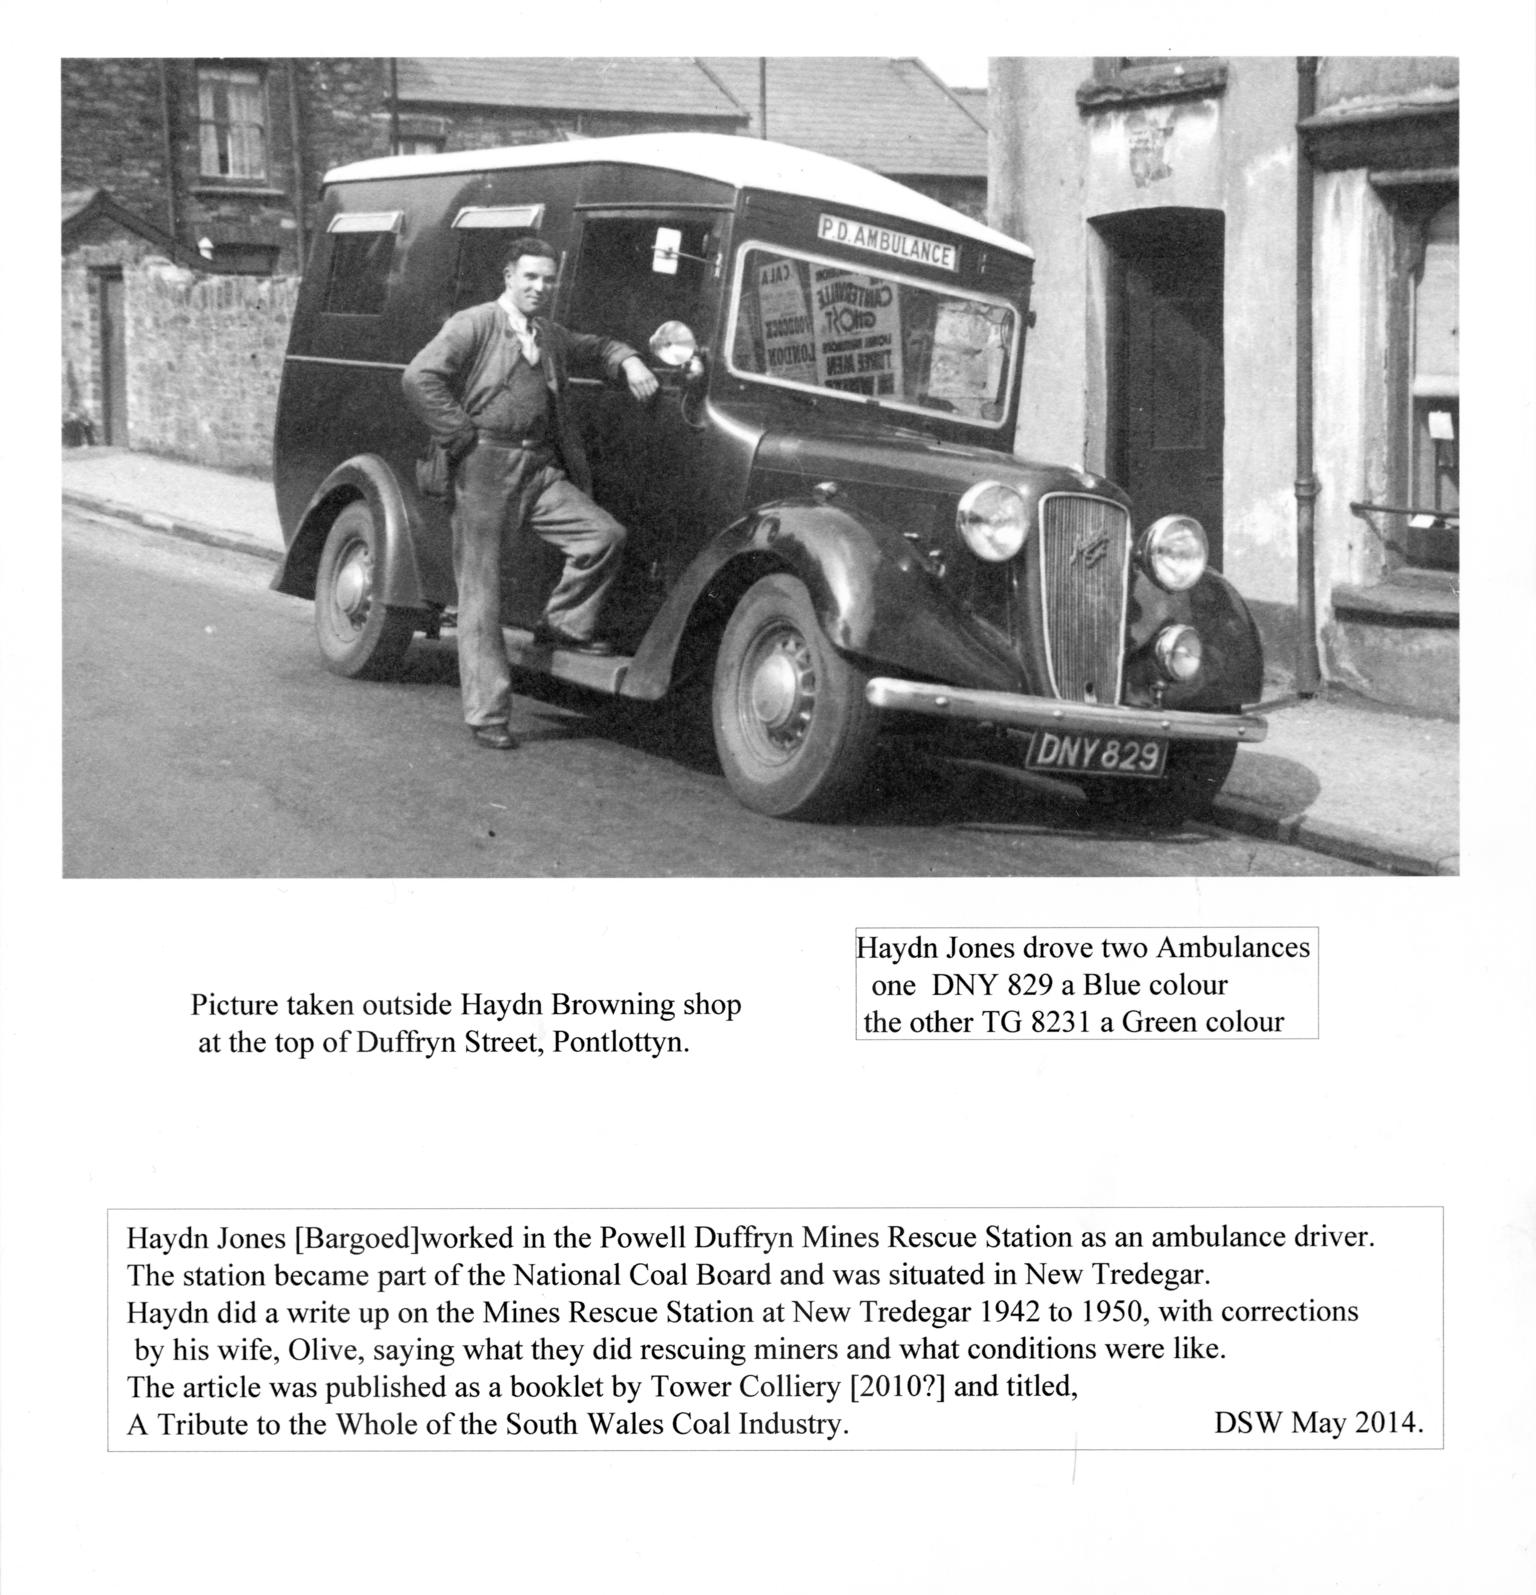 Haydn Jones with Powell Duffryn ambulance, photograph